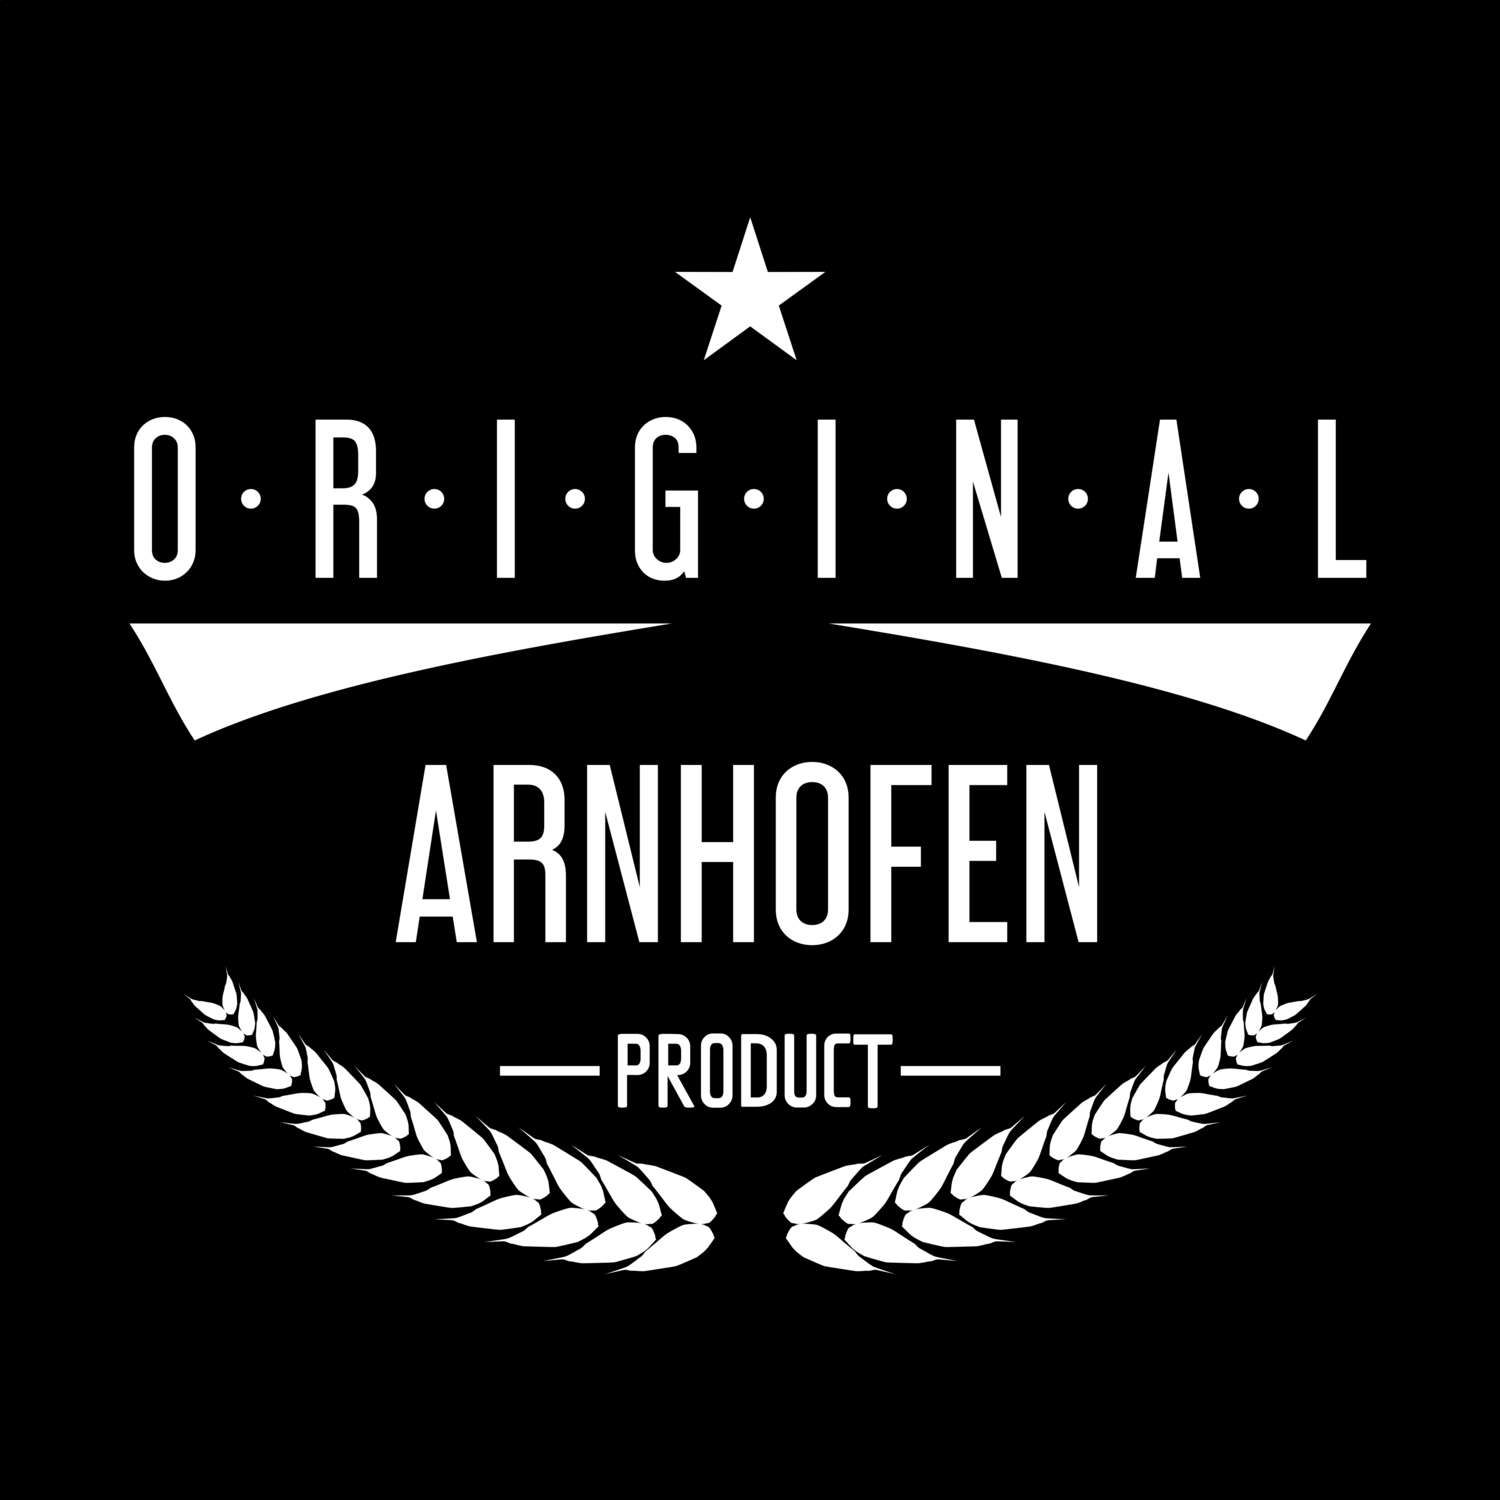 Arnhofen T-Shirt »Original Product«